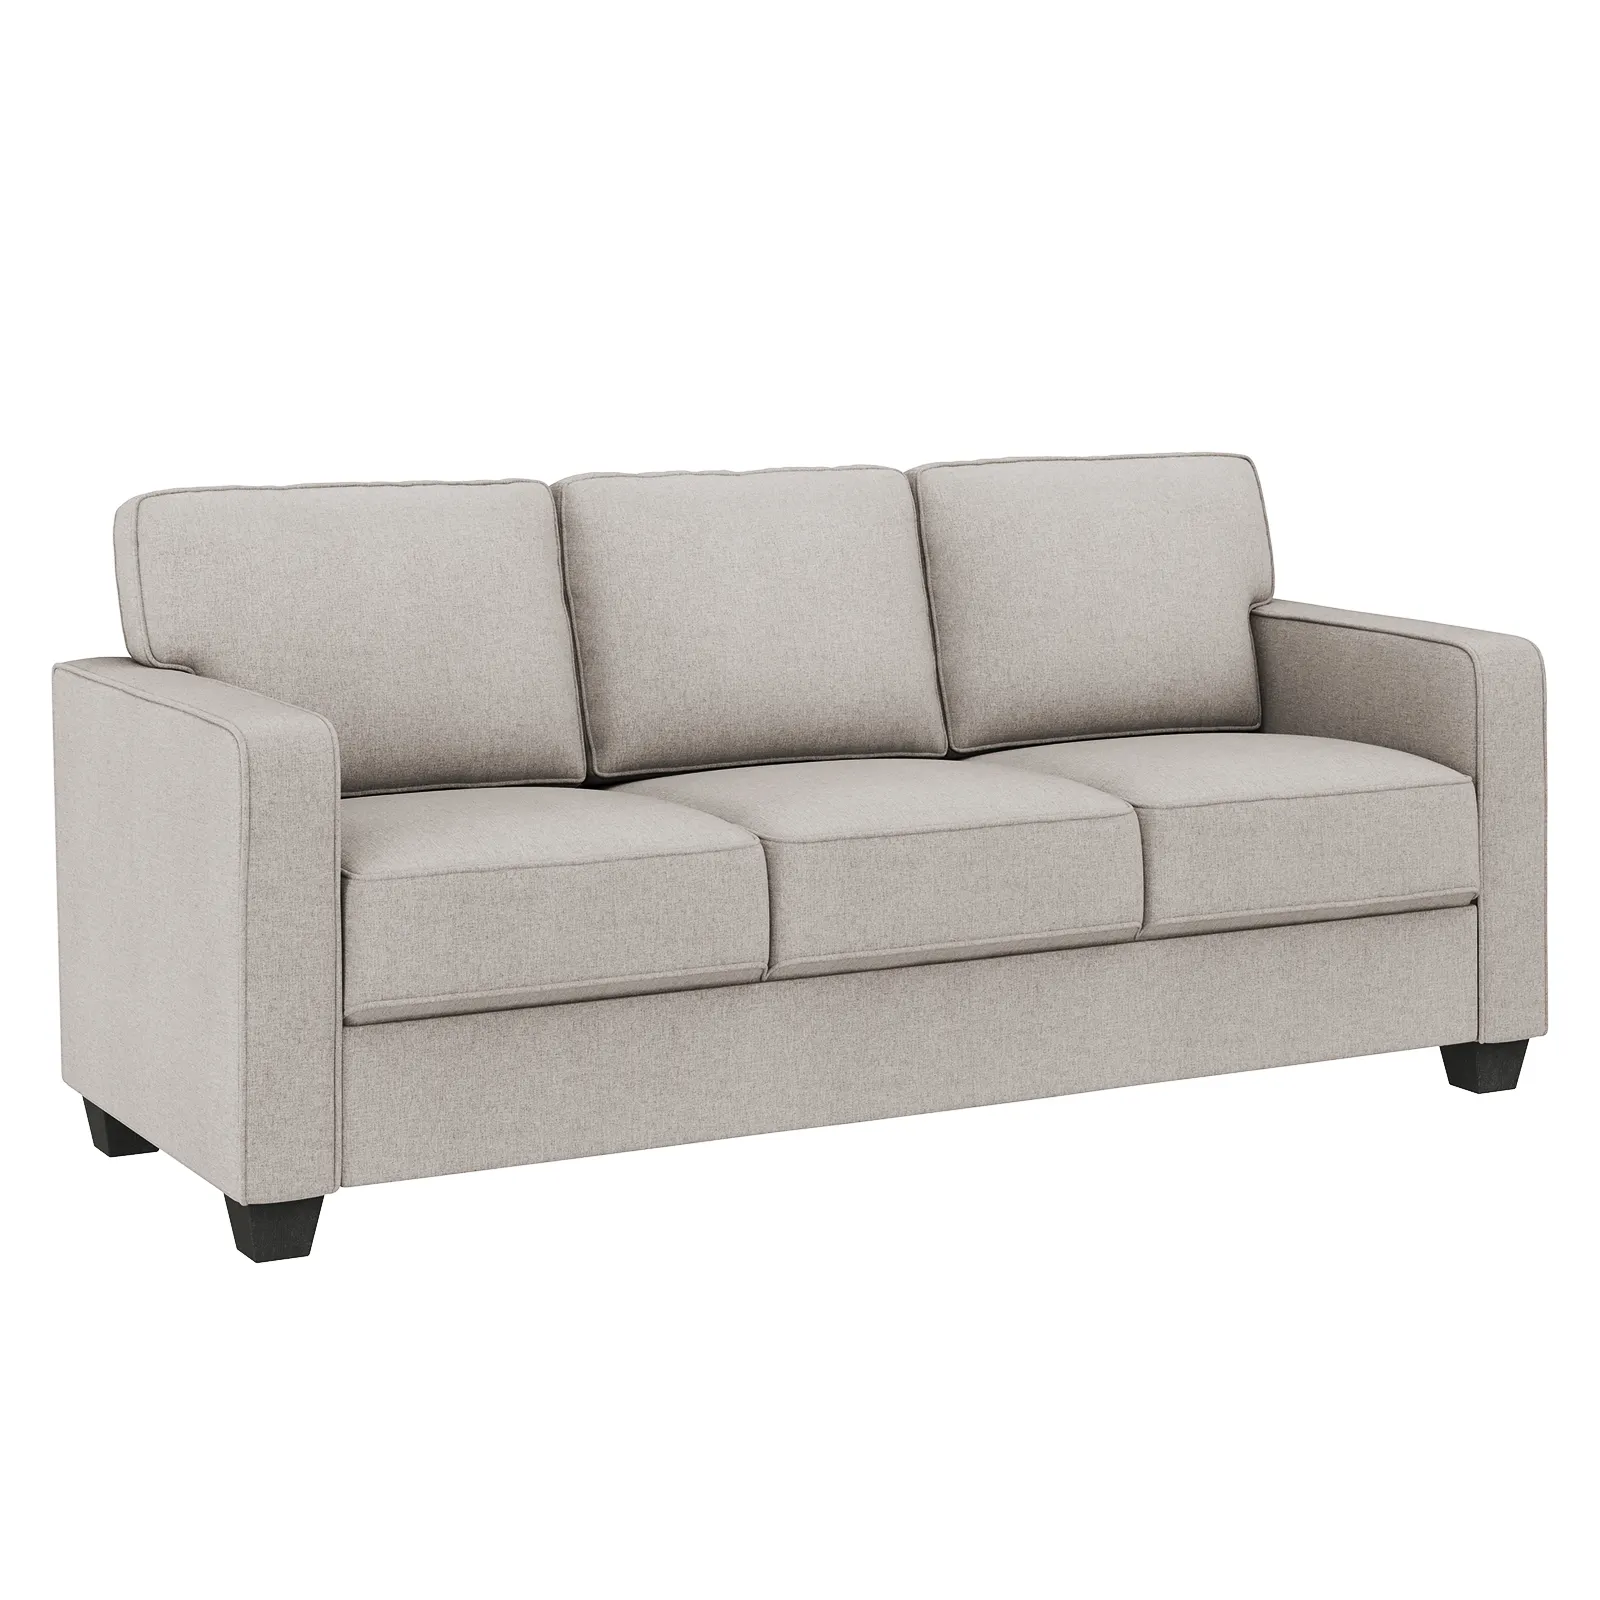 VASAGLE Modern reclining 3 seater fabric couches sofa modern livingroom furniture living room sofa